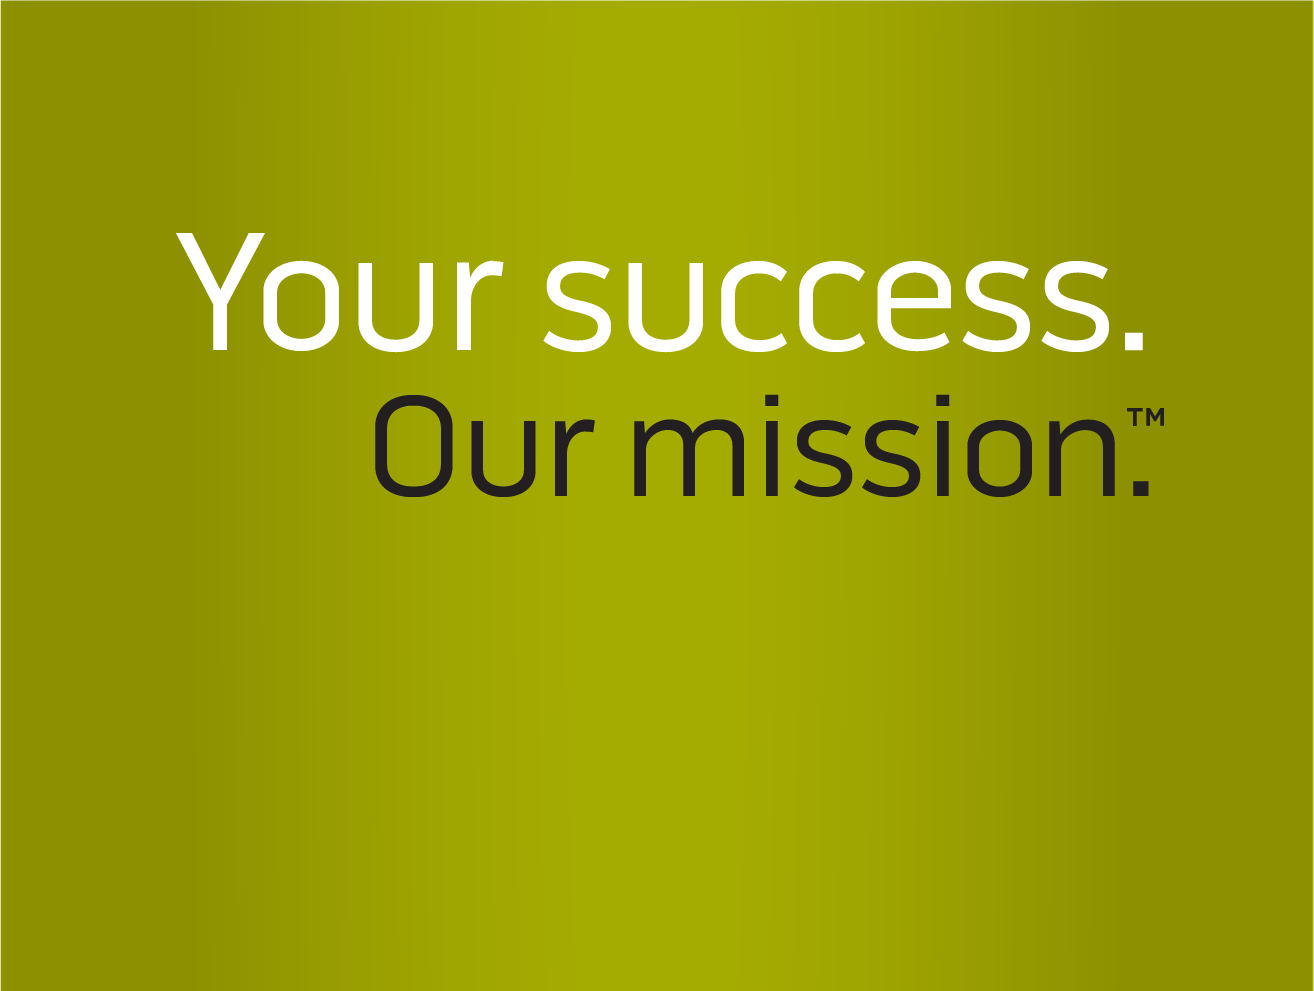 Your success. Our mission.